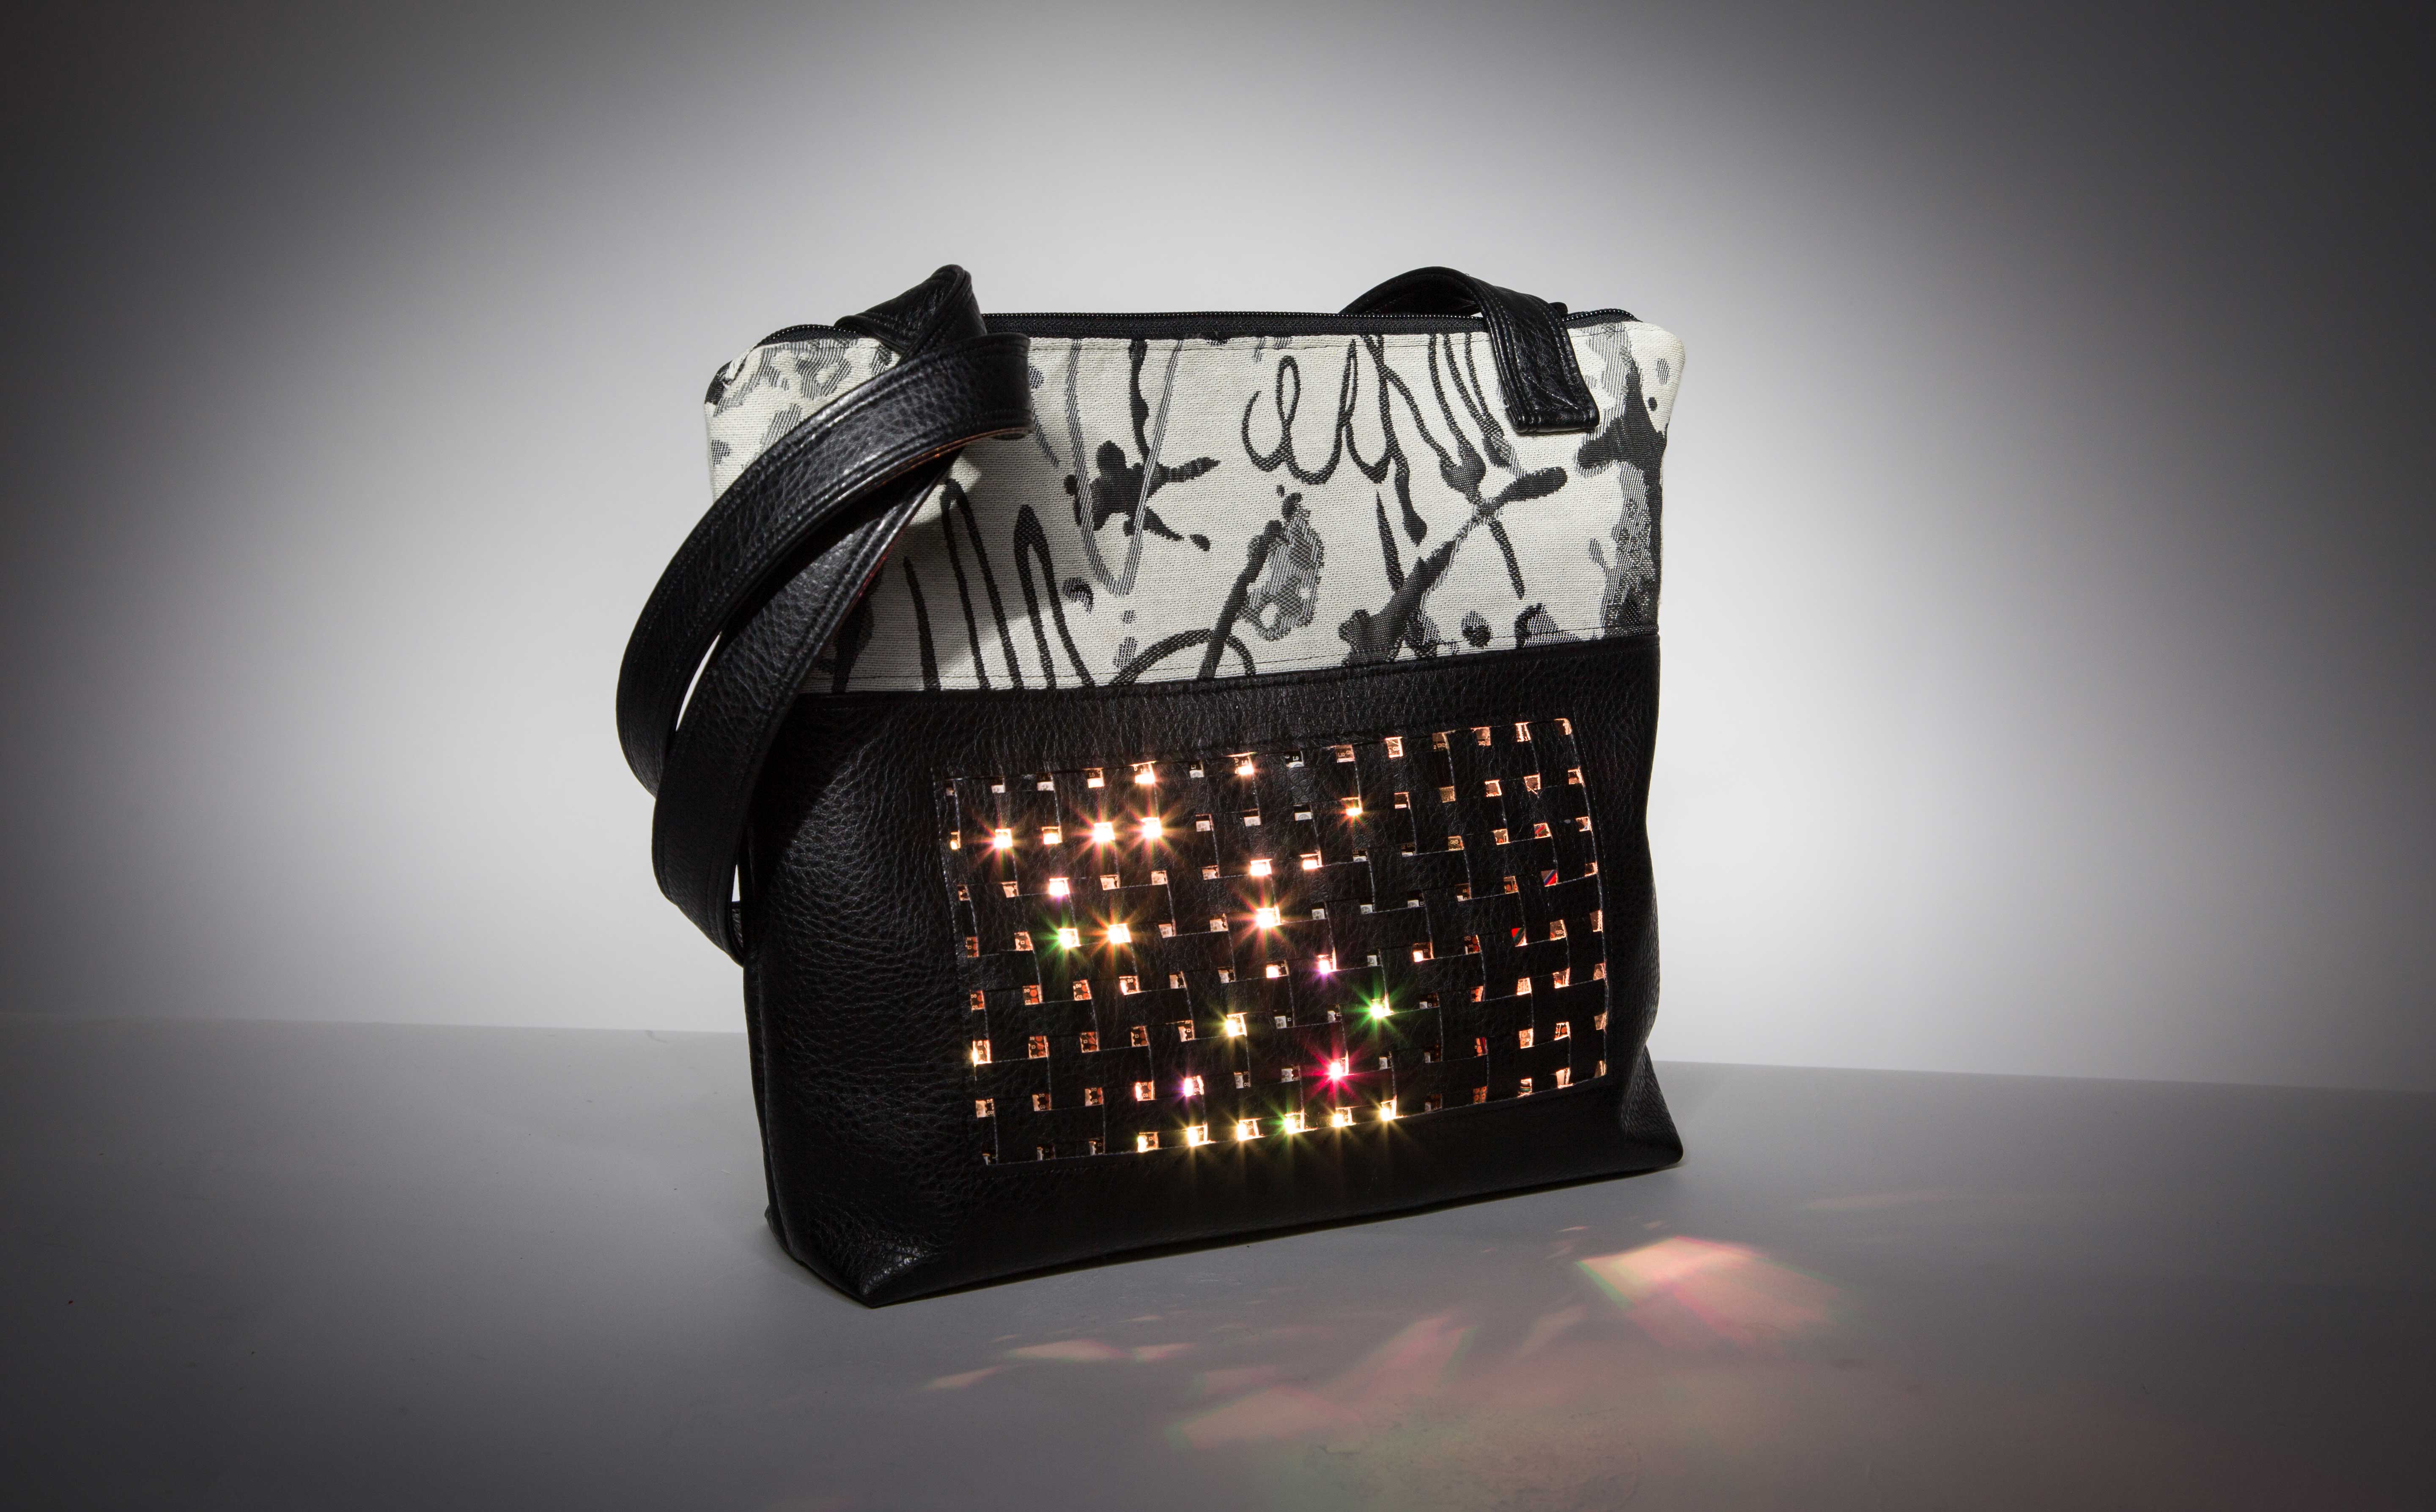 Sew a Custom Handbag with a Built-In LED Matrix